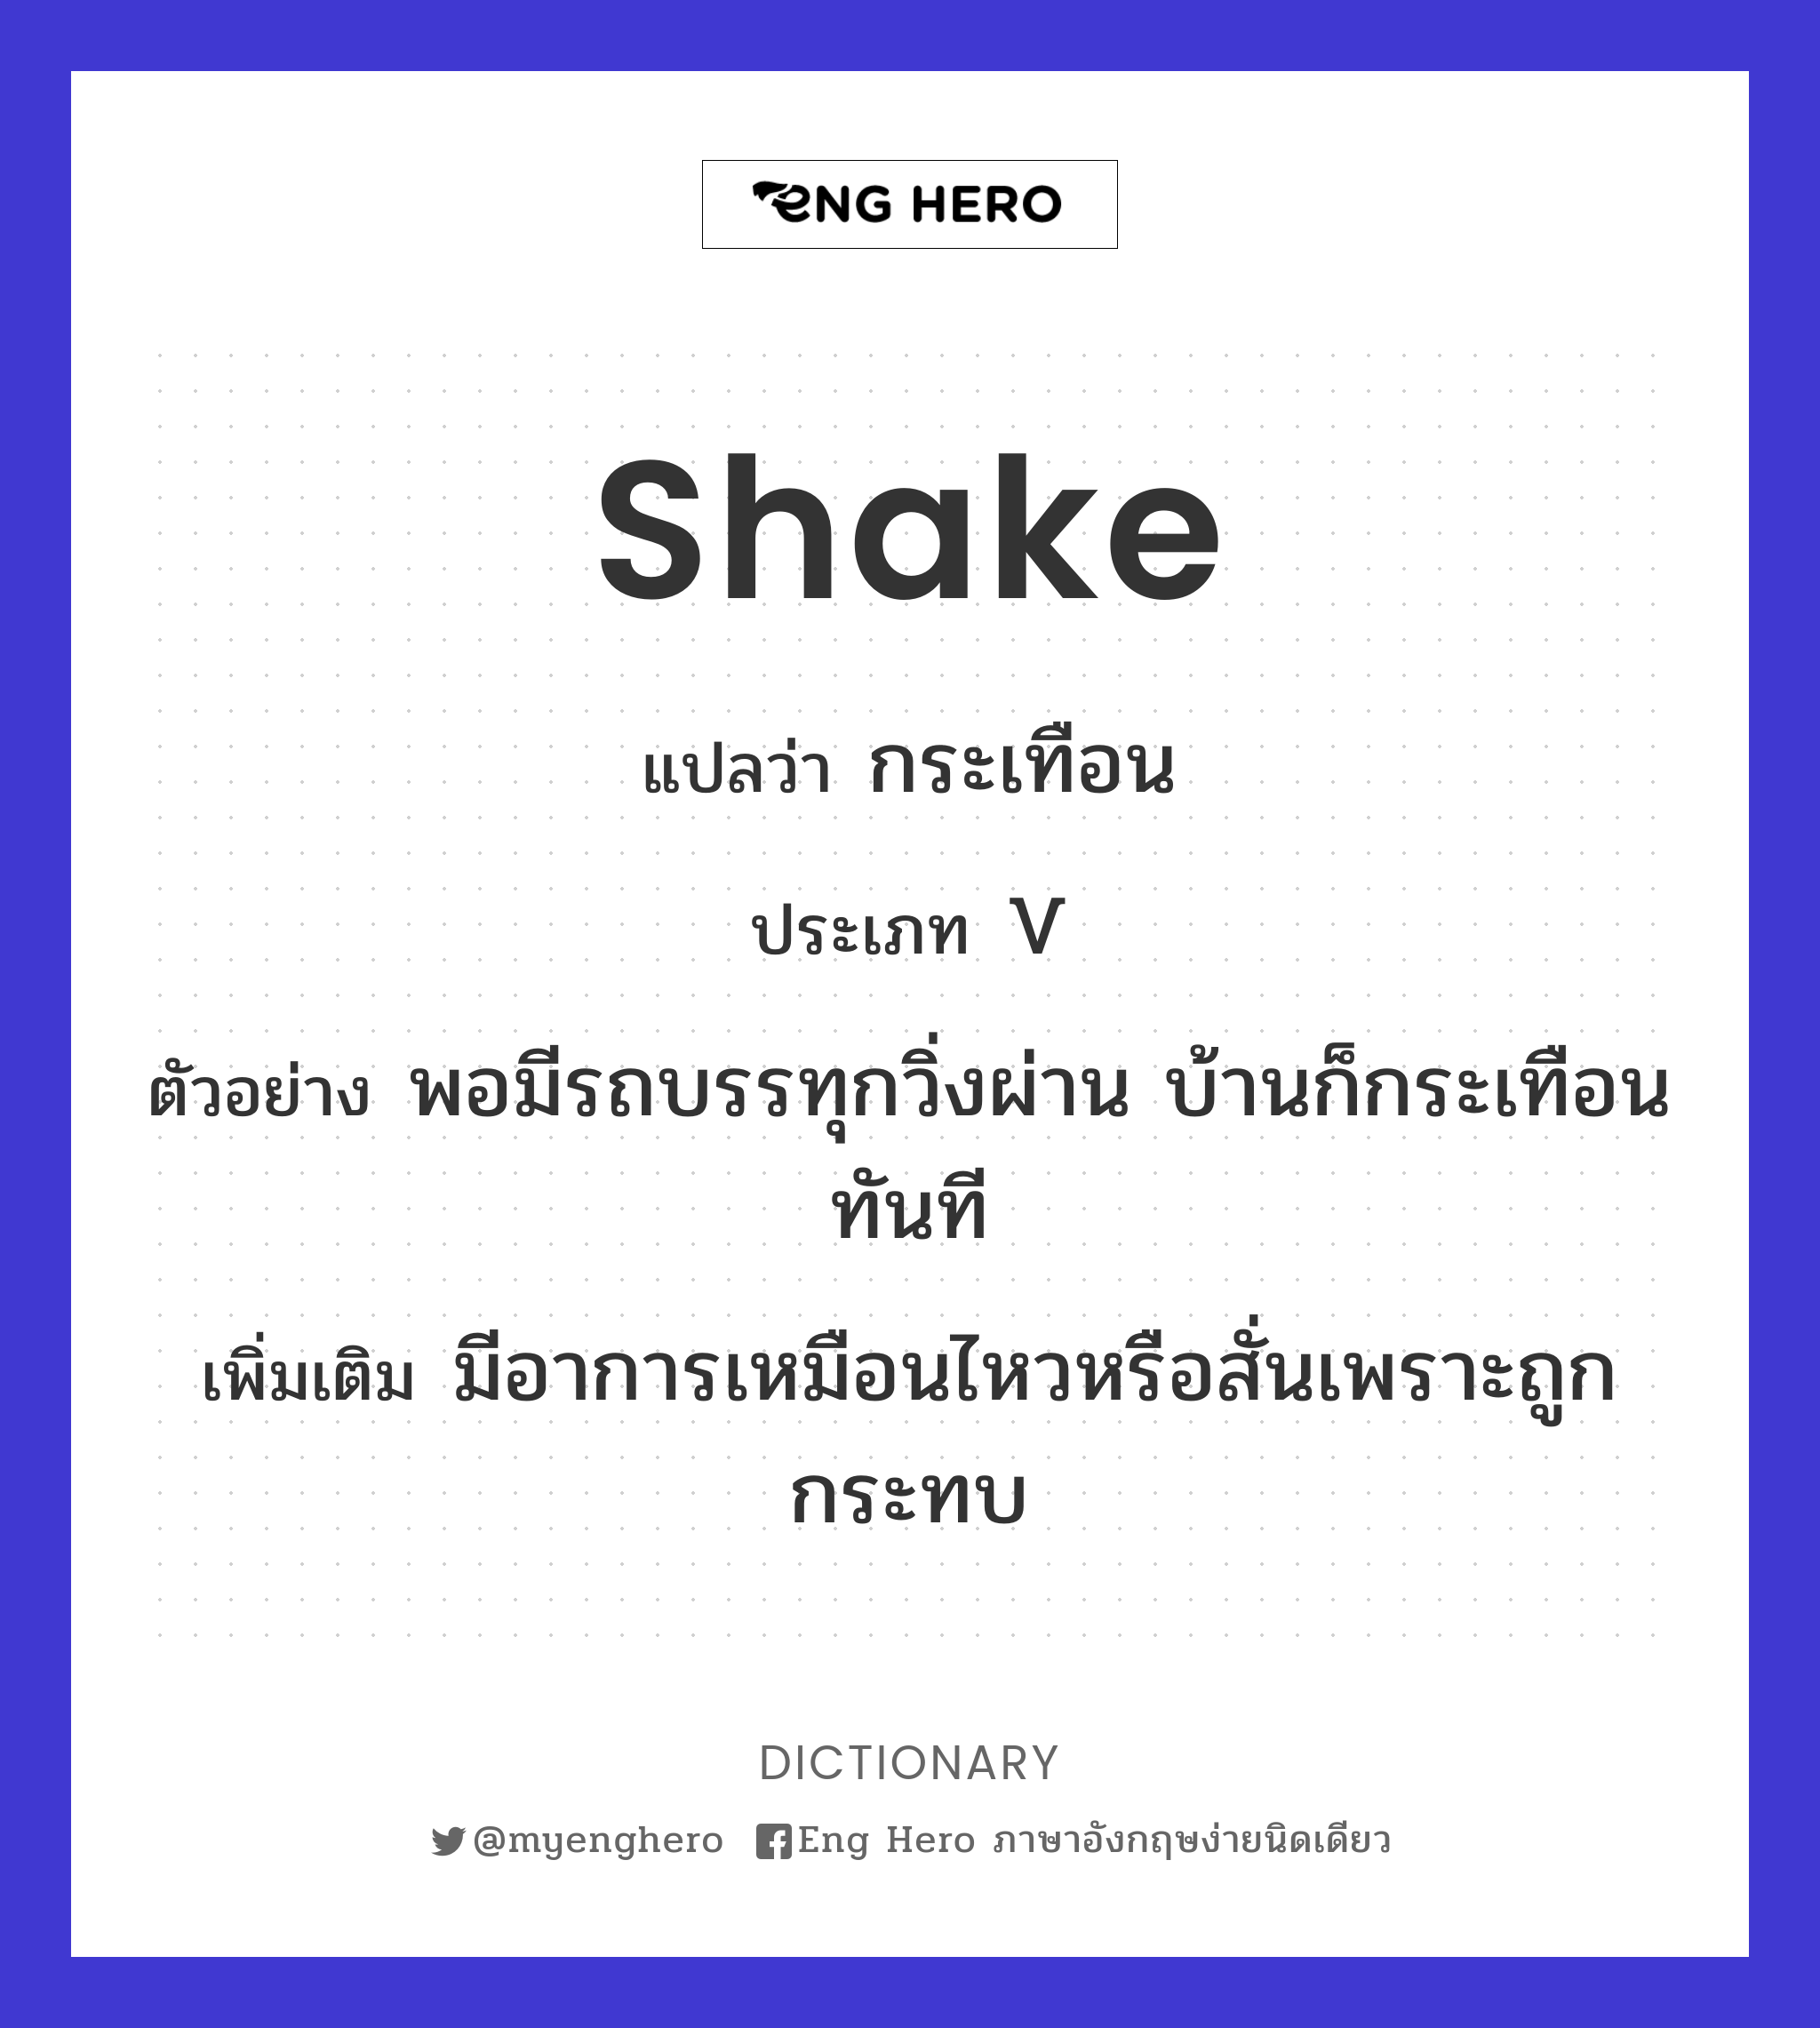 shake